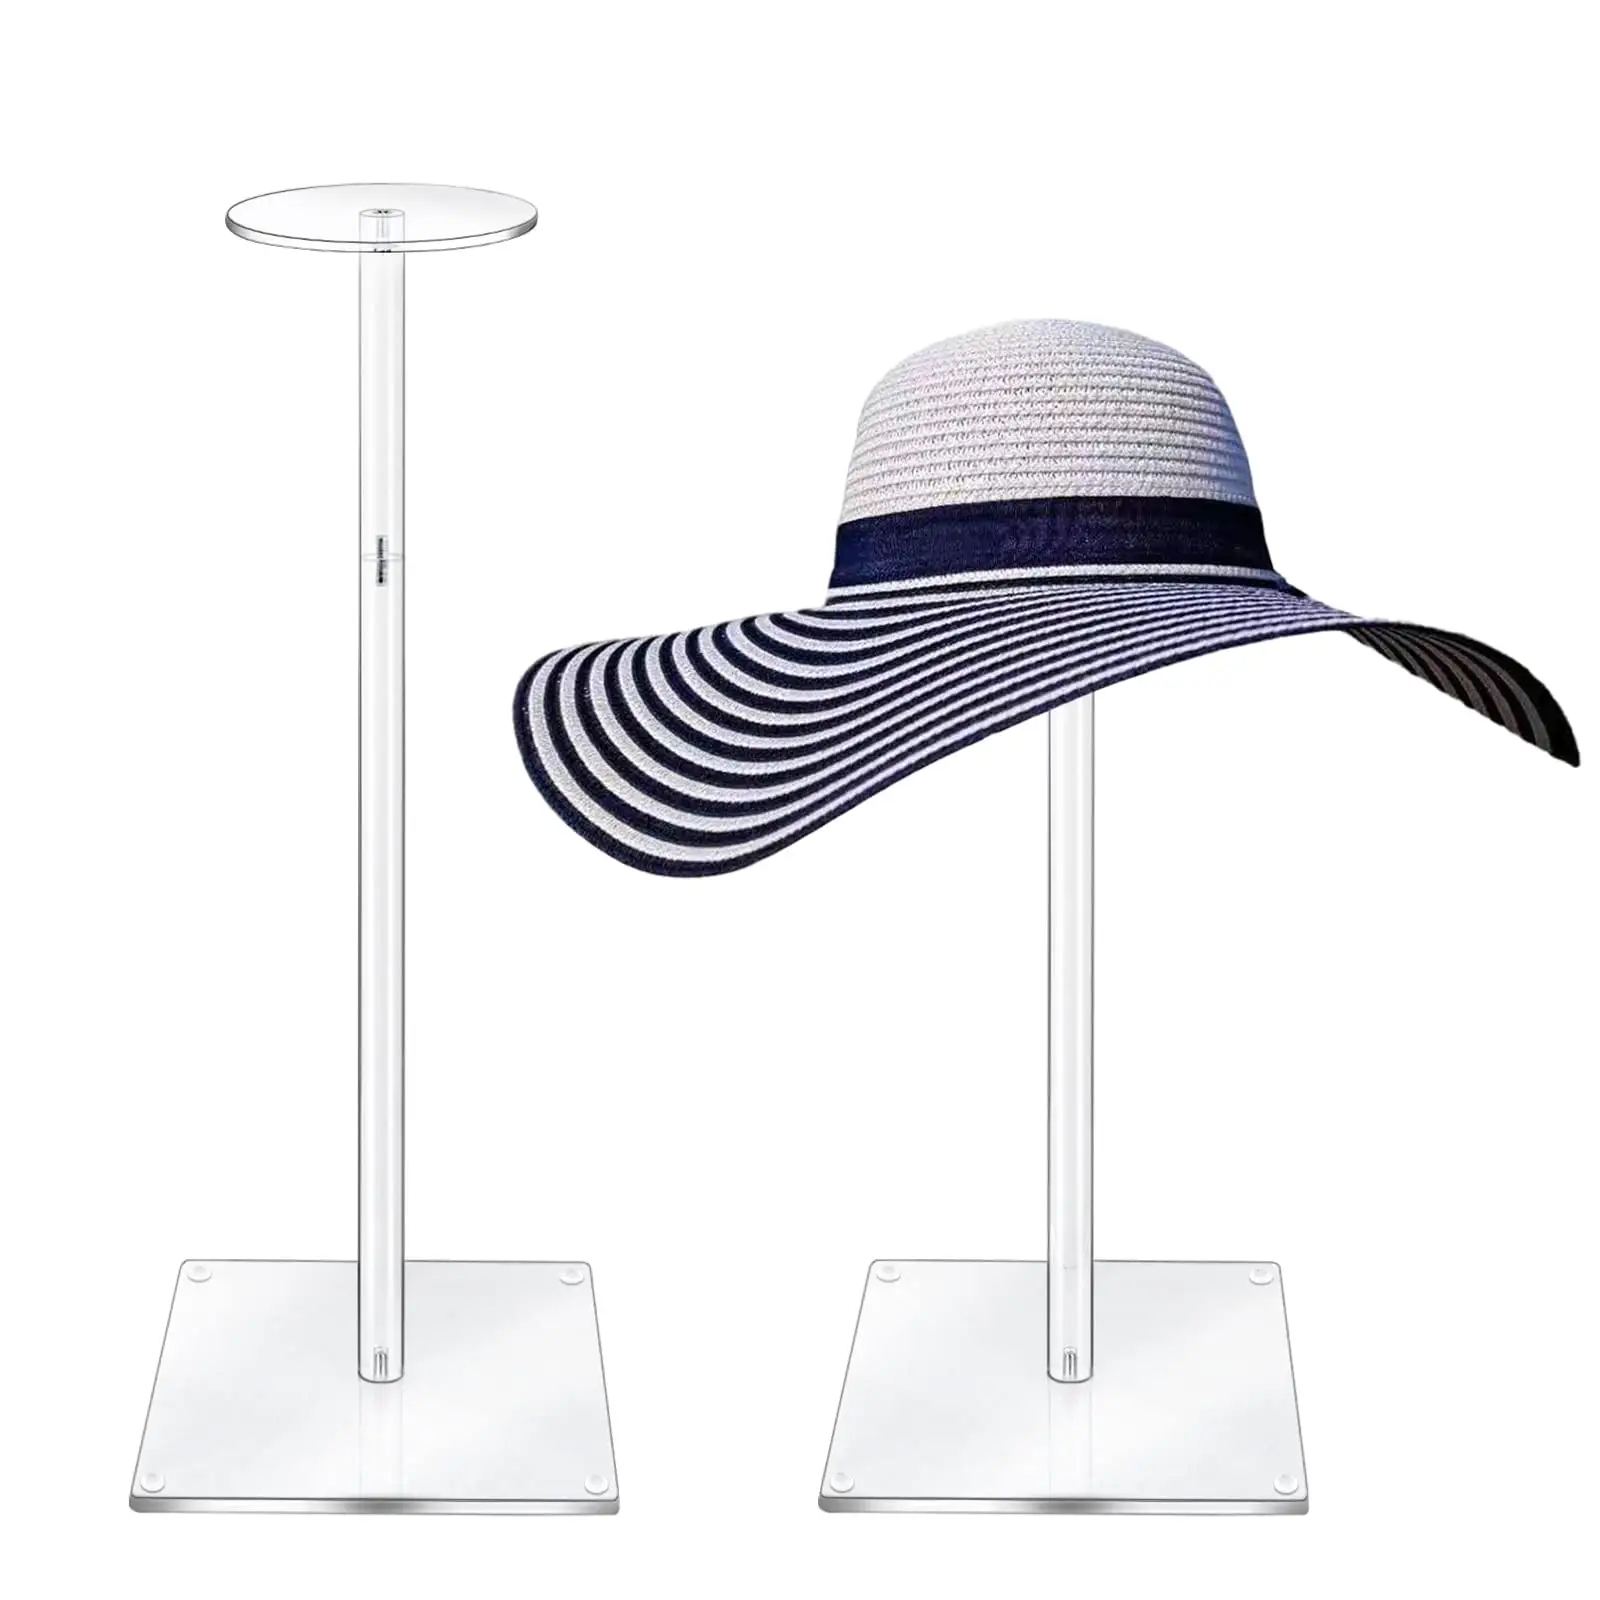 Gorro decorativo Fedora Cowboy Clear Hat Display Stand Acrílico Hat Rack con base redonda